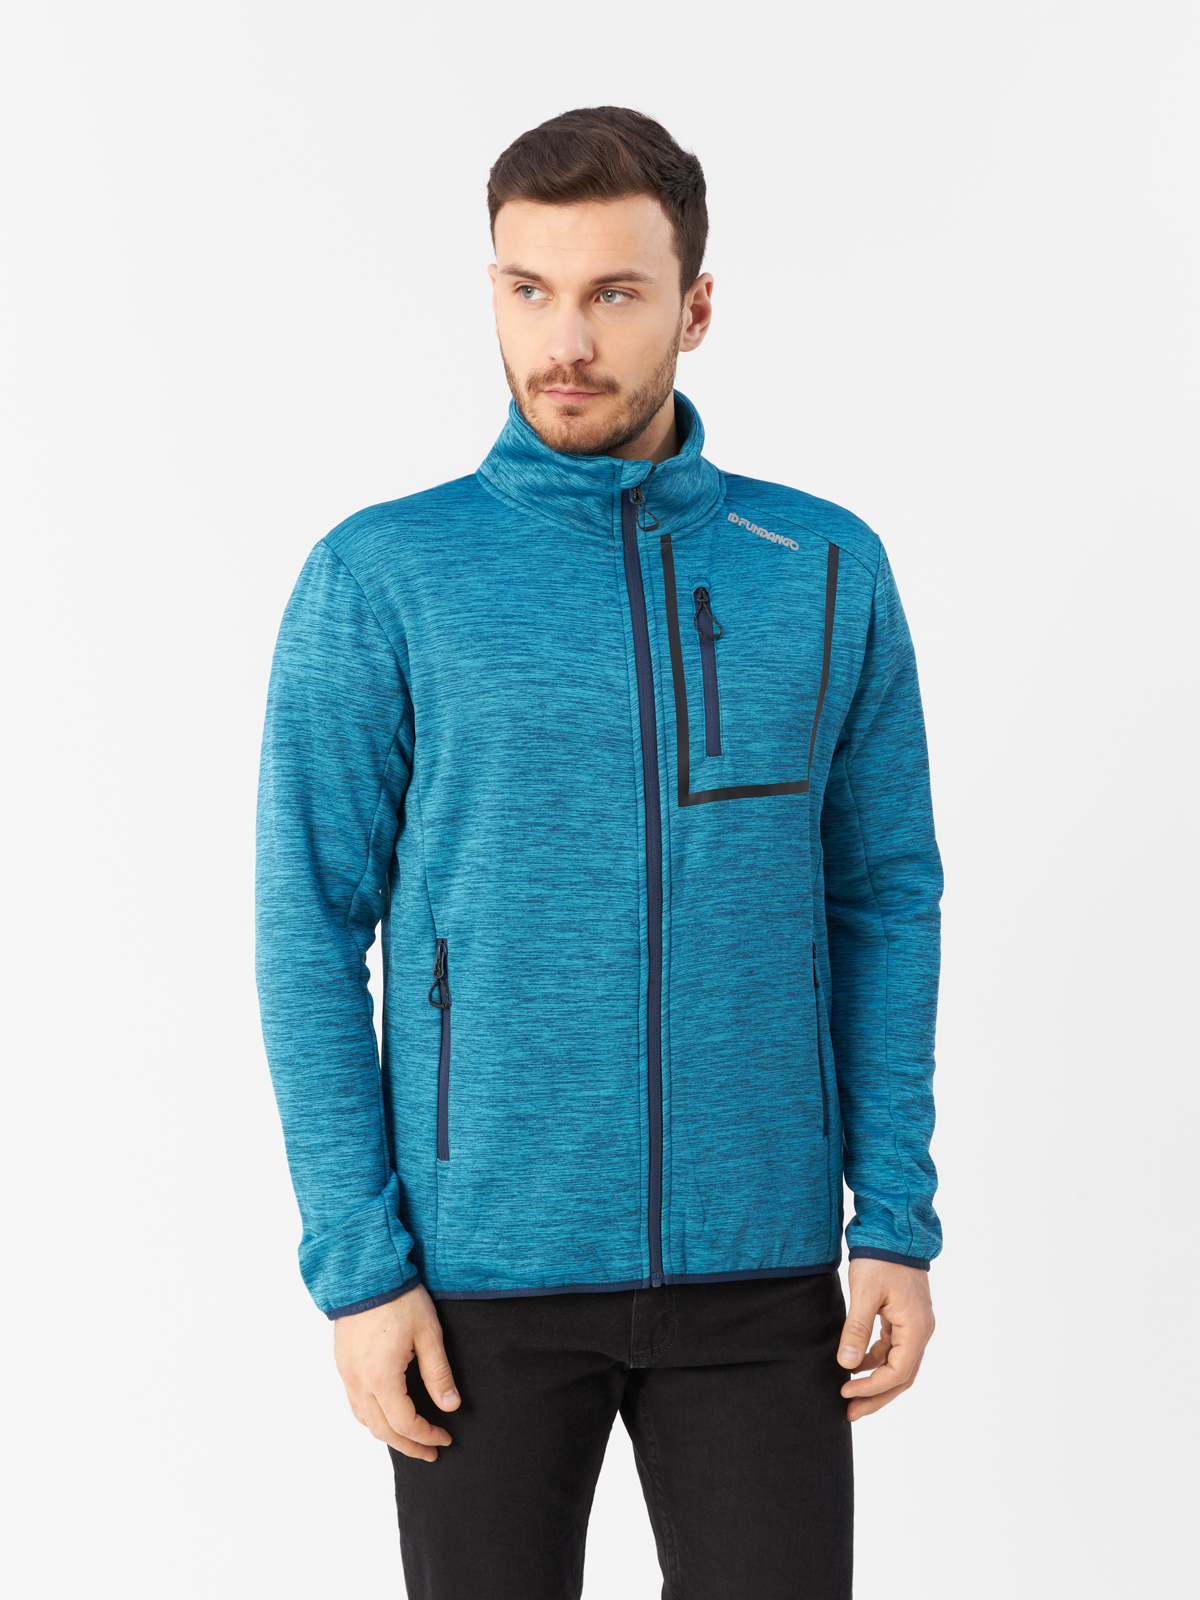 Куртка Fundango для мужчин, софтшелл, размер XXL, 1MAD106, бирюзово-синяя